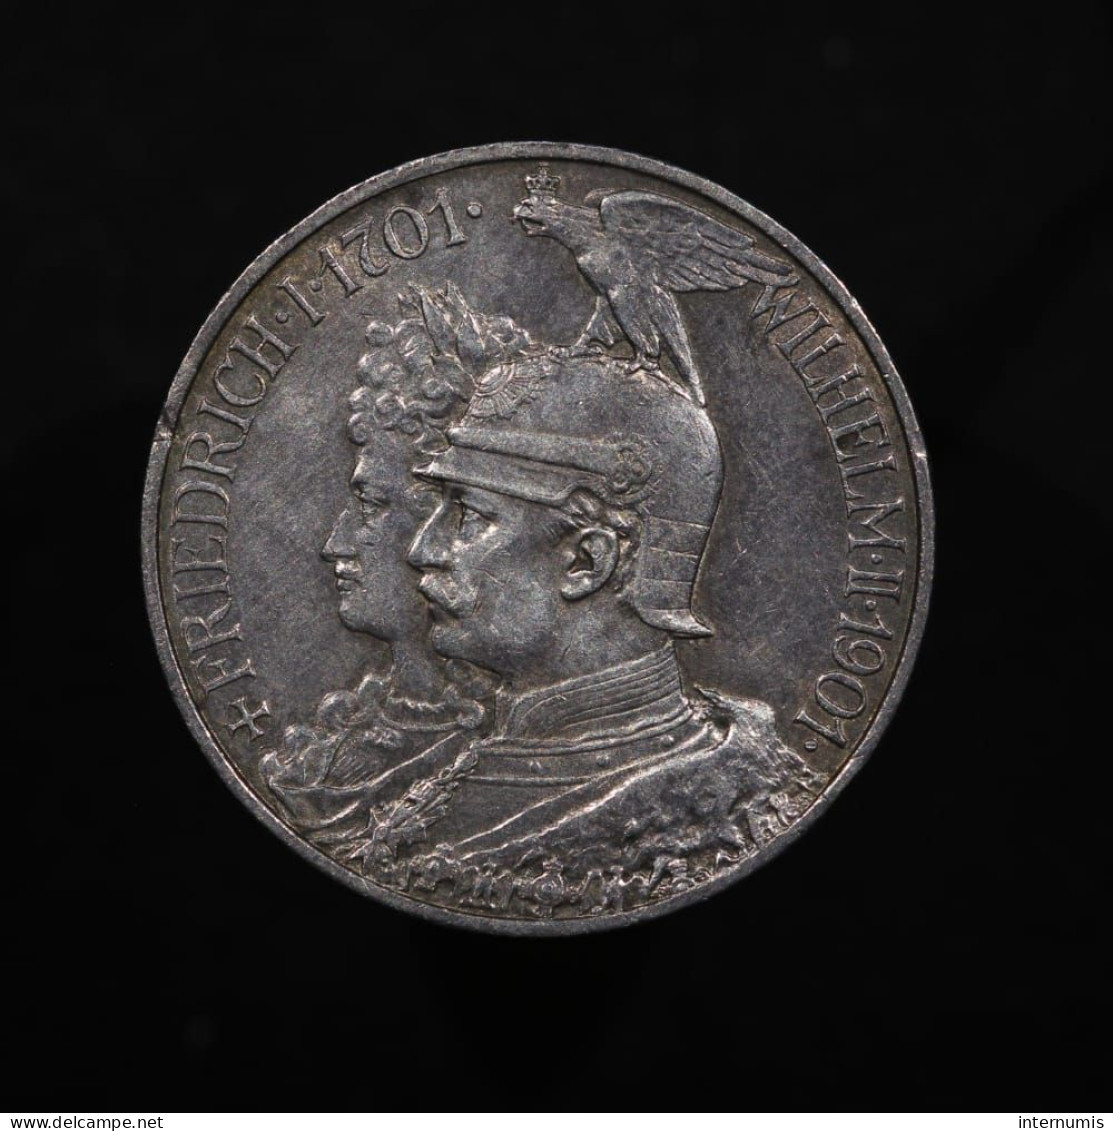 Allemagne / Germany, Wilhelm II (Prusse / Prussia), 2 Mark, 1901, A - Berlin, Argent (Silver), SUP (AU), KM#525 - 2, 3 & 5 Mark Plata